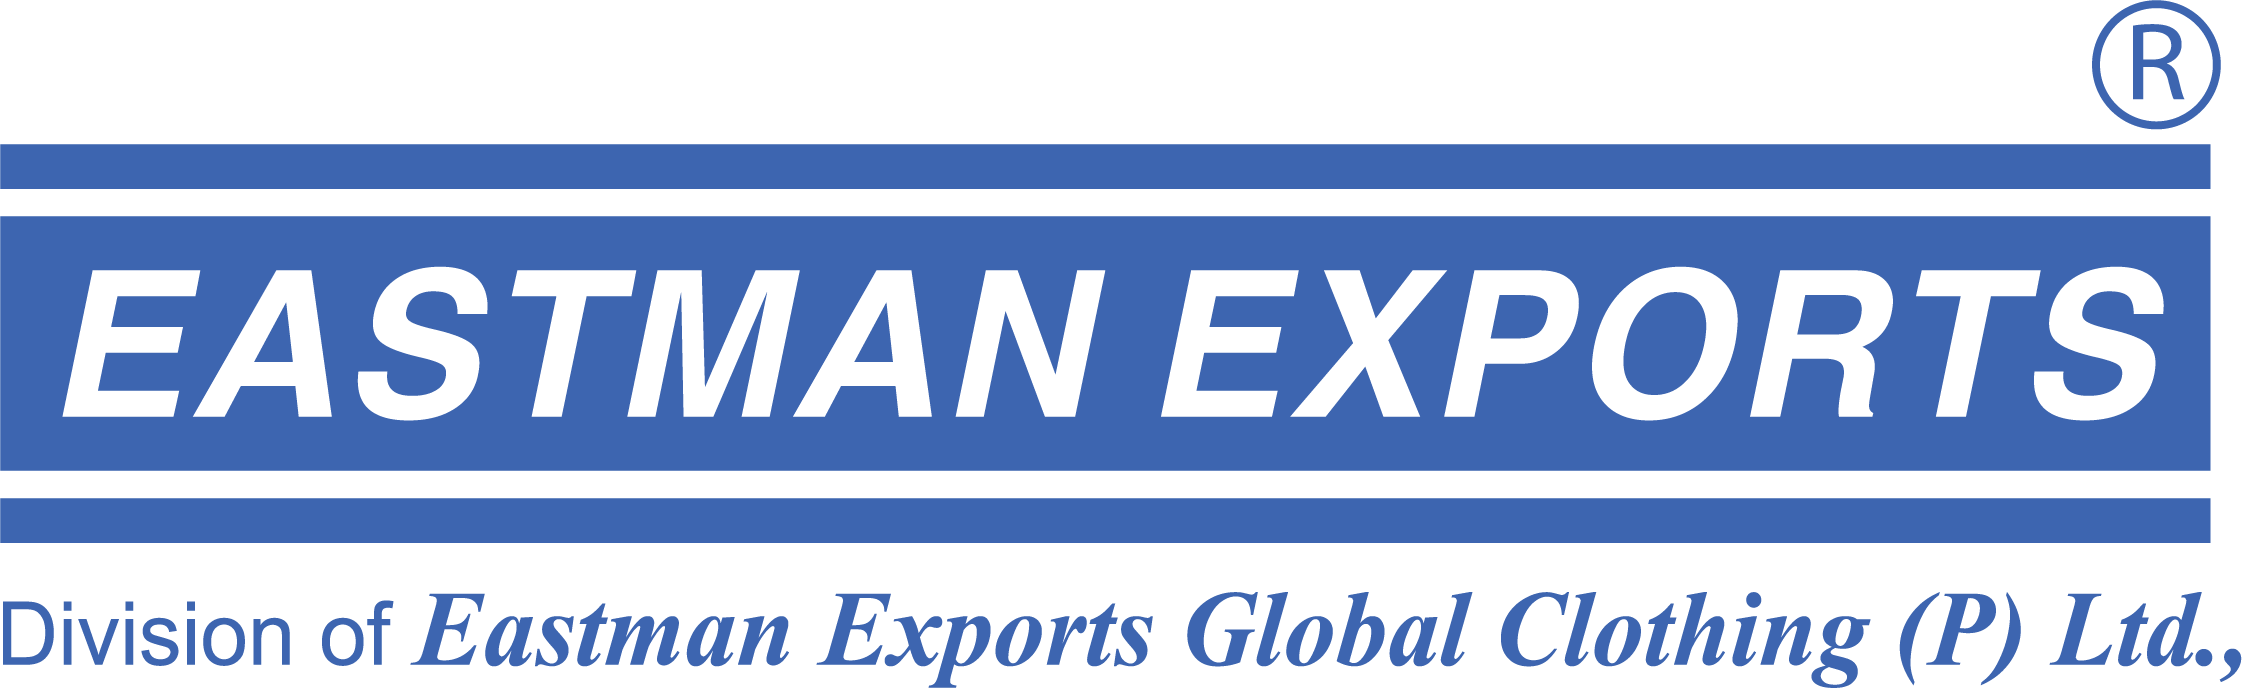 Eastman Exports Global Clothing (P) Ltd